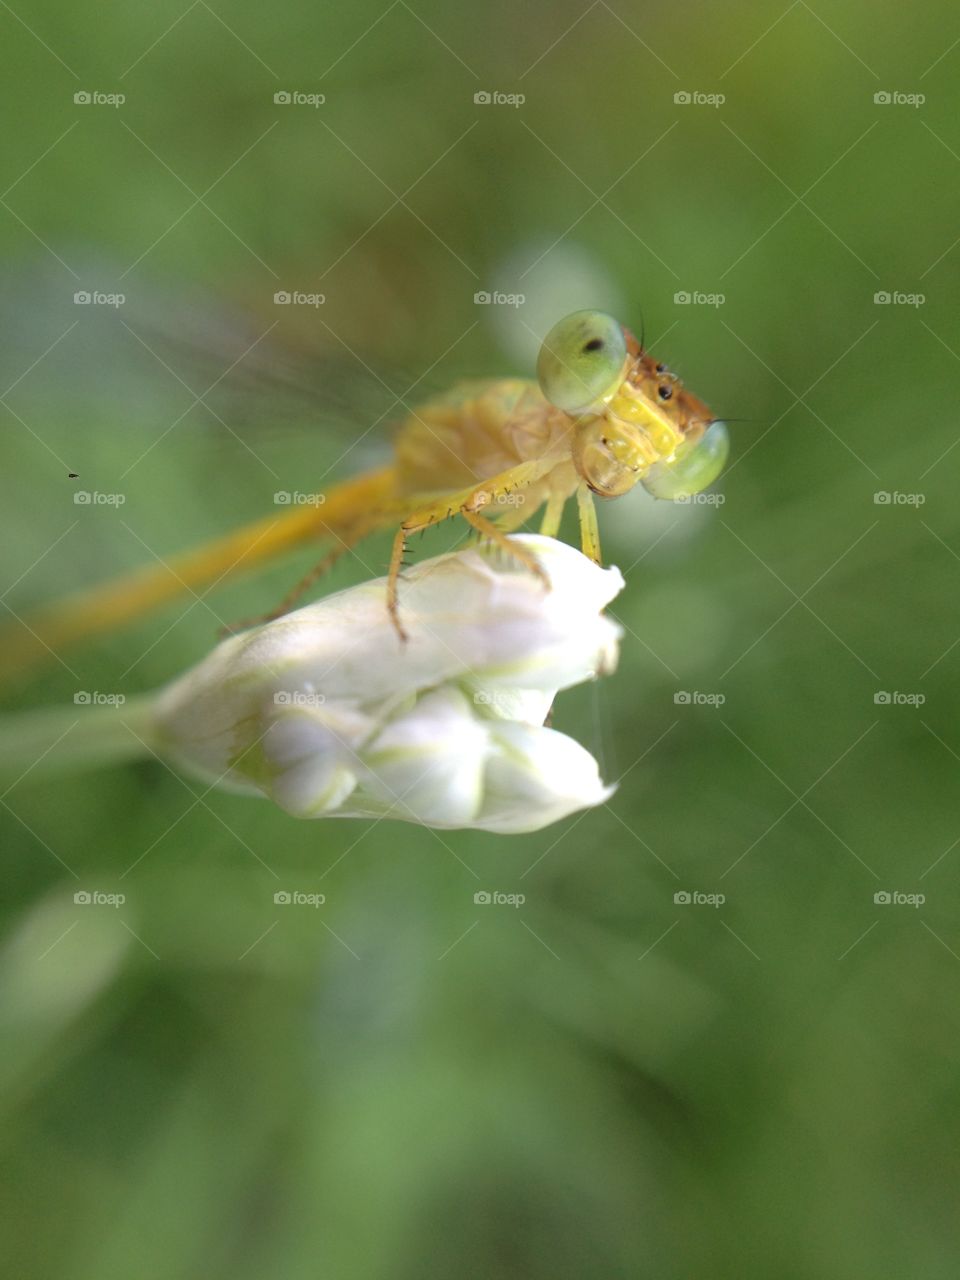 Dragonfly on white bud